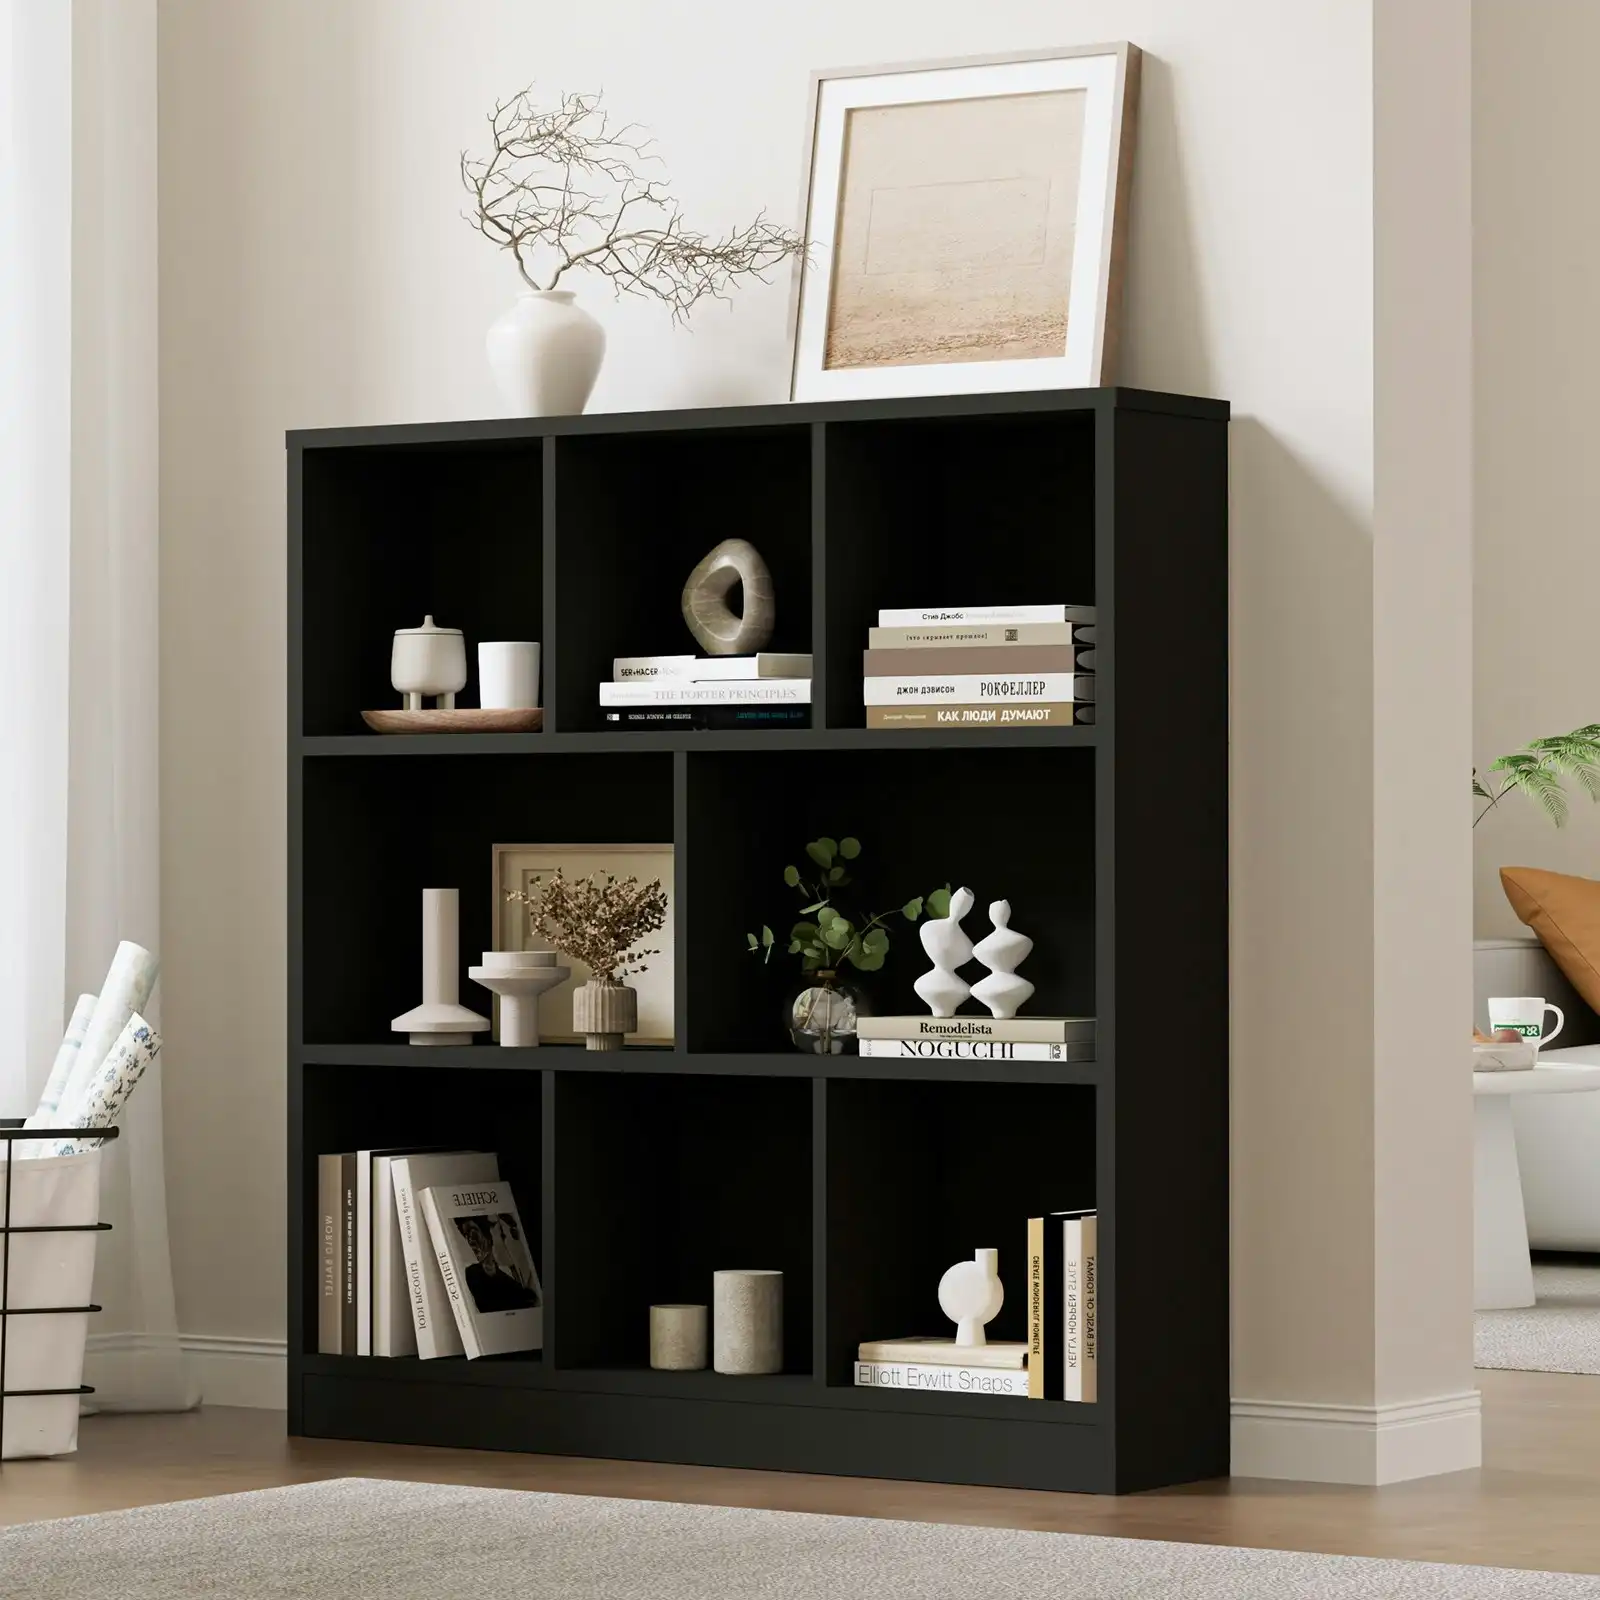 Oikiture Bookshelf Bookcase Display Shelves Unit Storage Organizer Stand Black